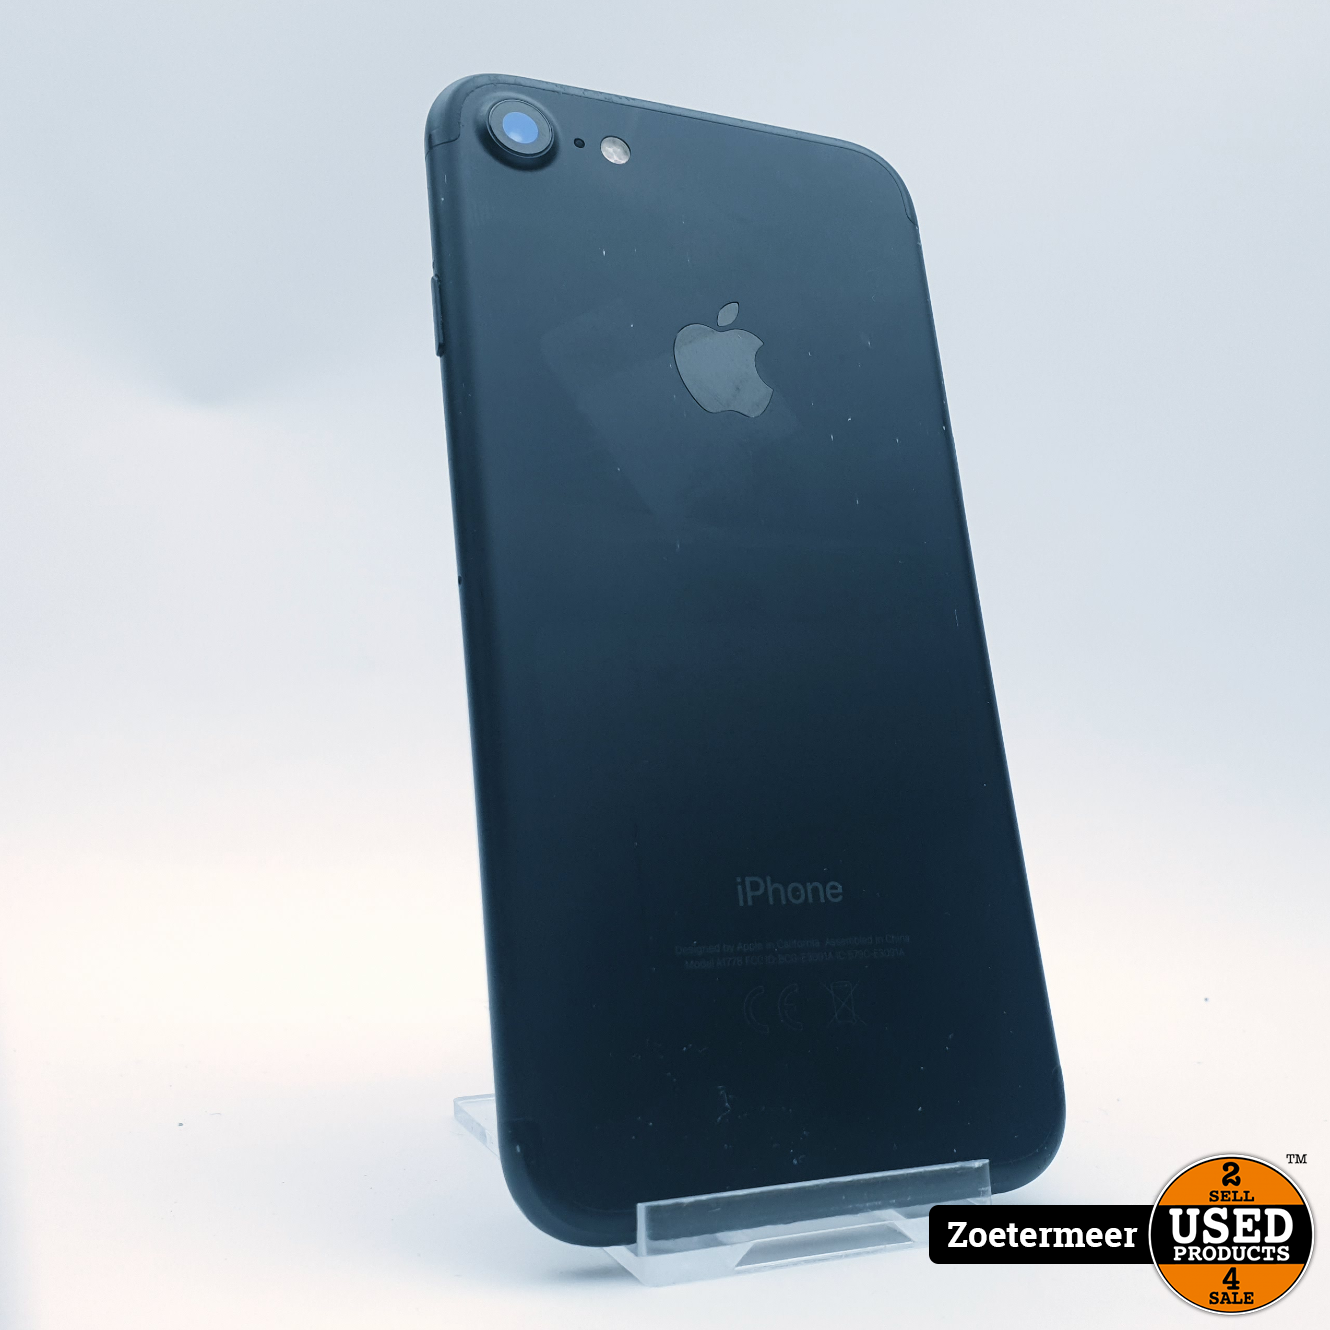 Bel terug moeilijk eindeloos Apple iPhone 7 32GB 100% Zwart - Used Products Zoetermeer